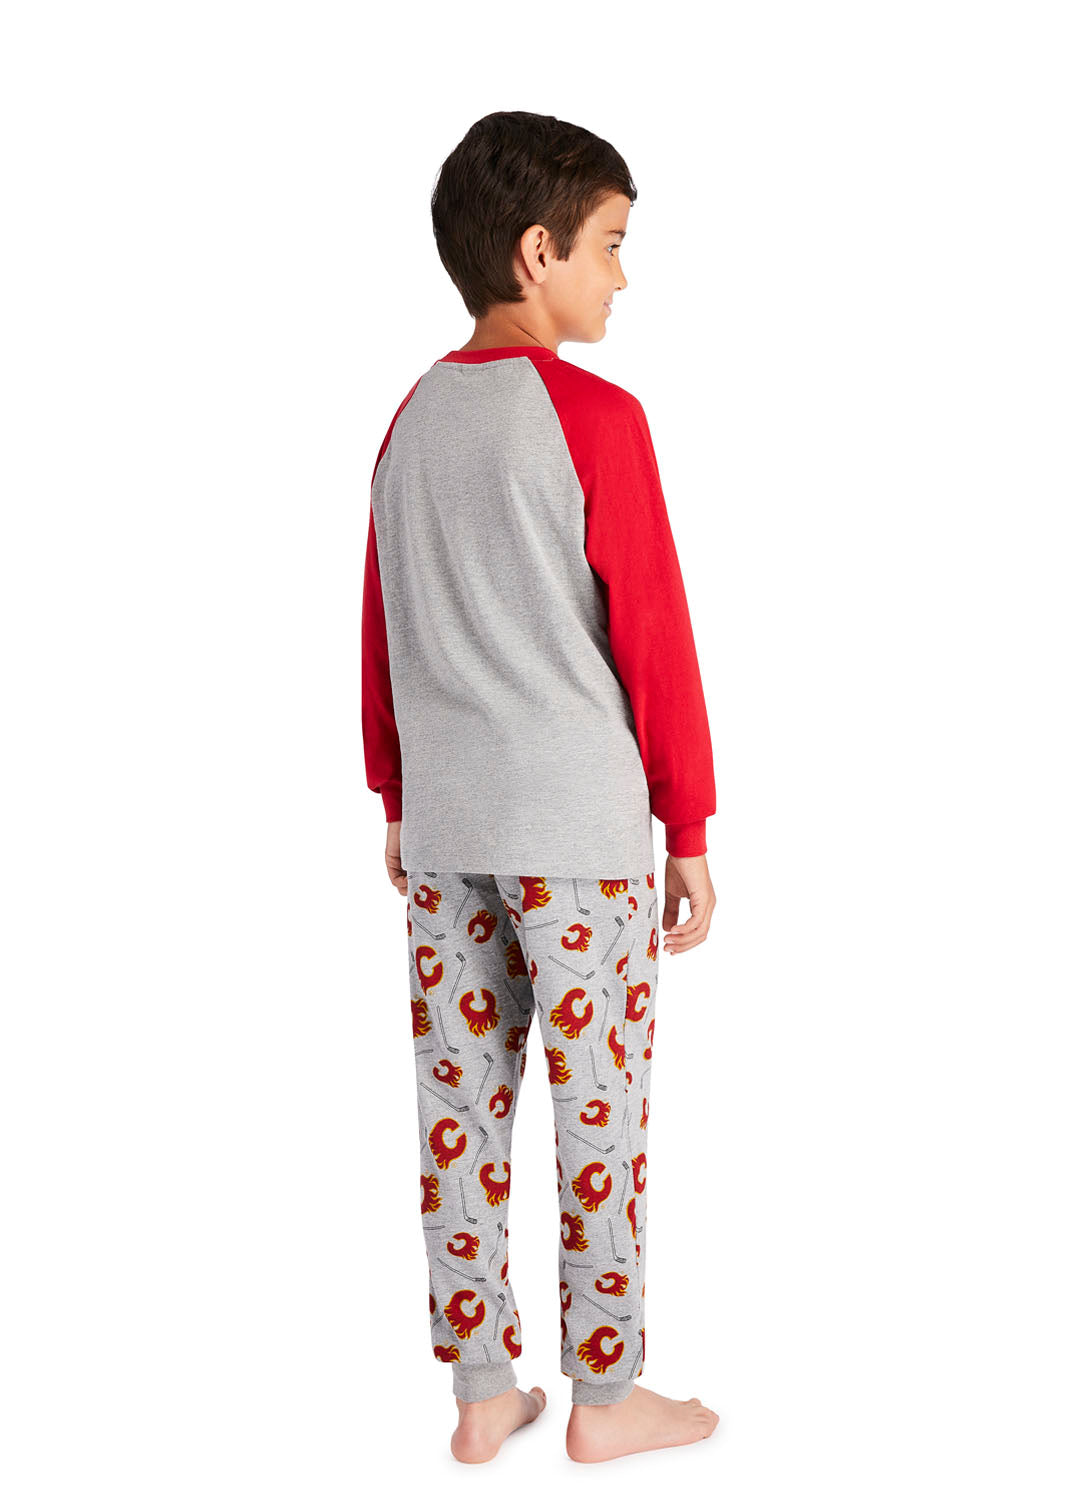 Back view Boy wearing Calgary Flames Pajama Set